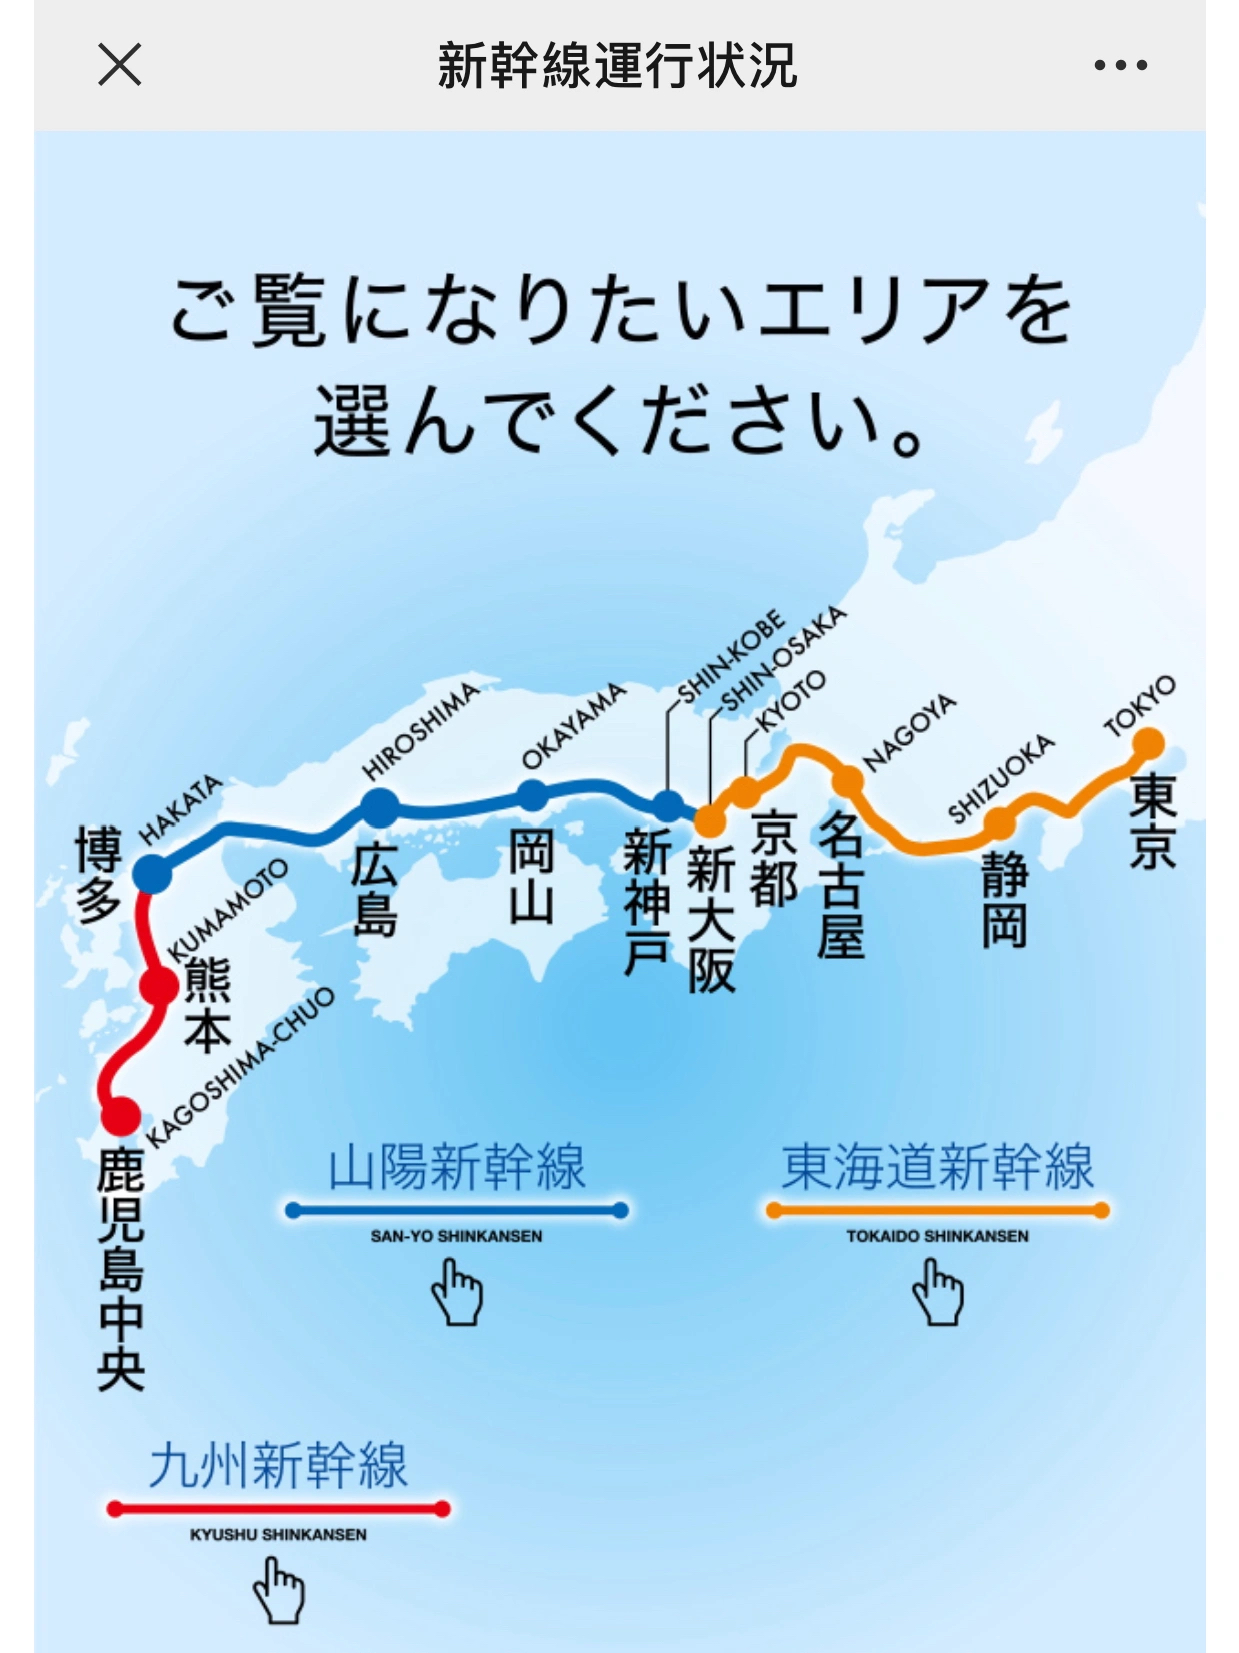 Japan Shinkansen Train Guide